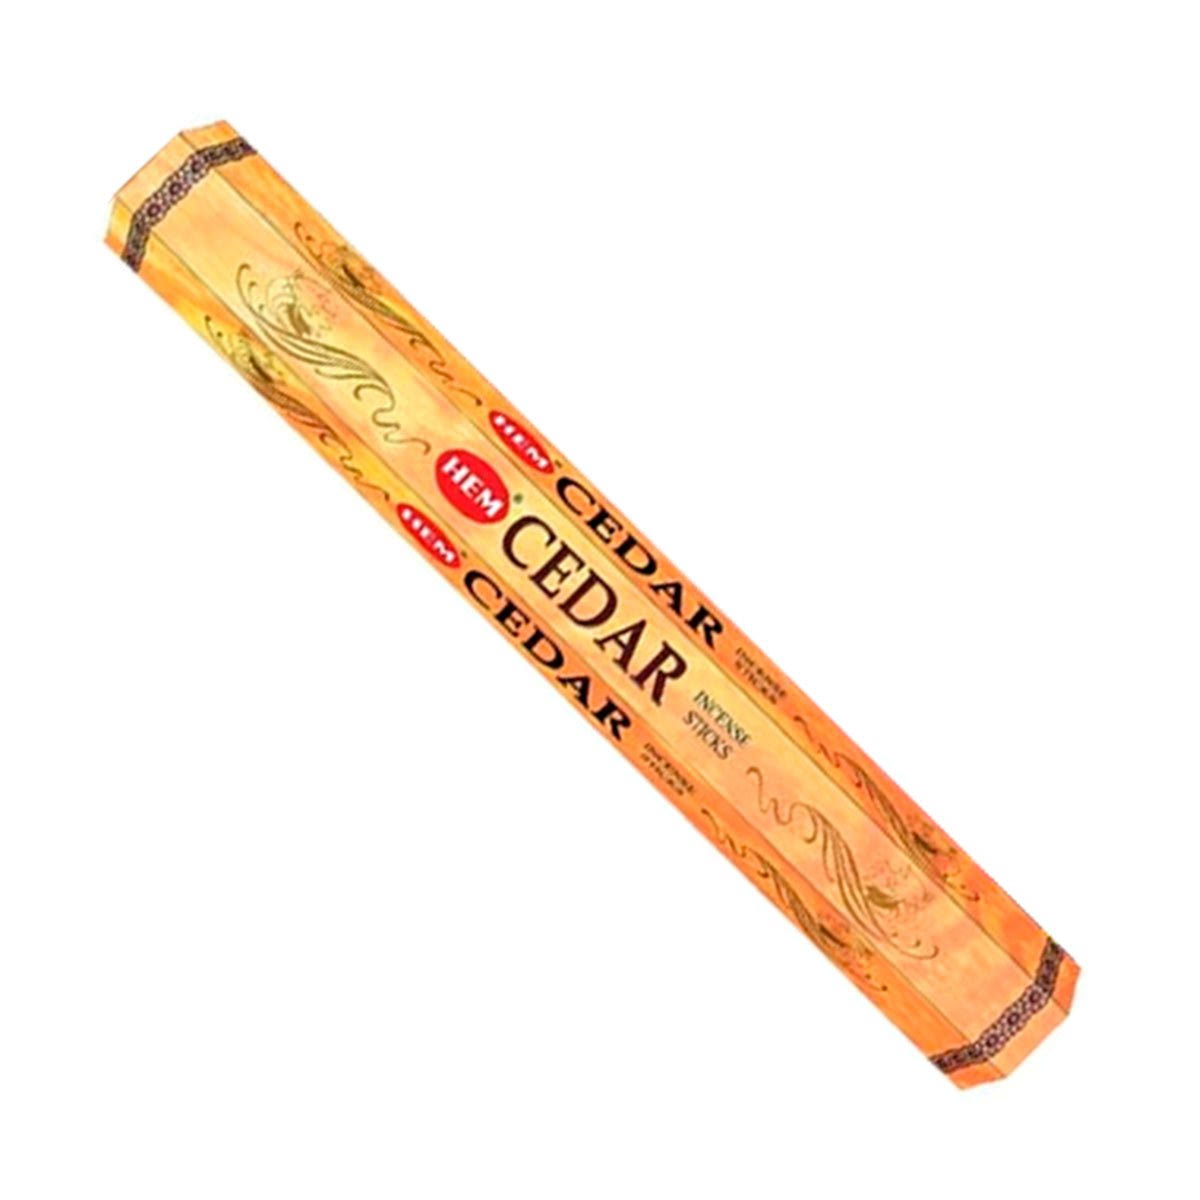 Hem Cedar Incense Sticks